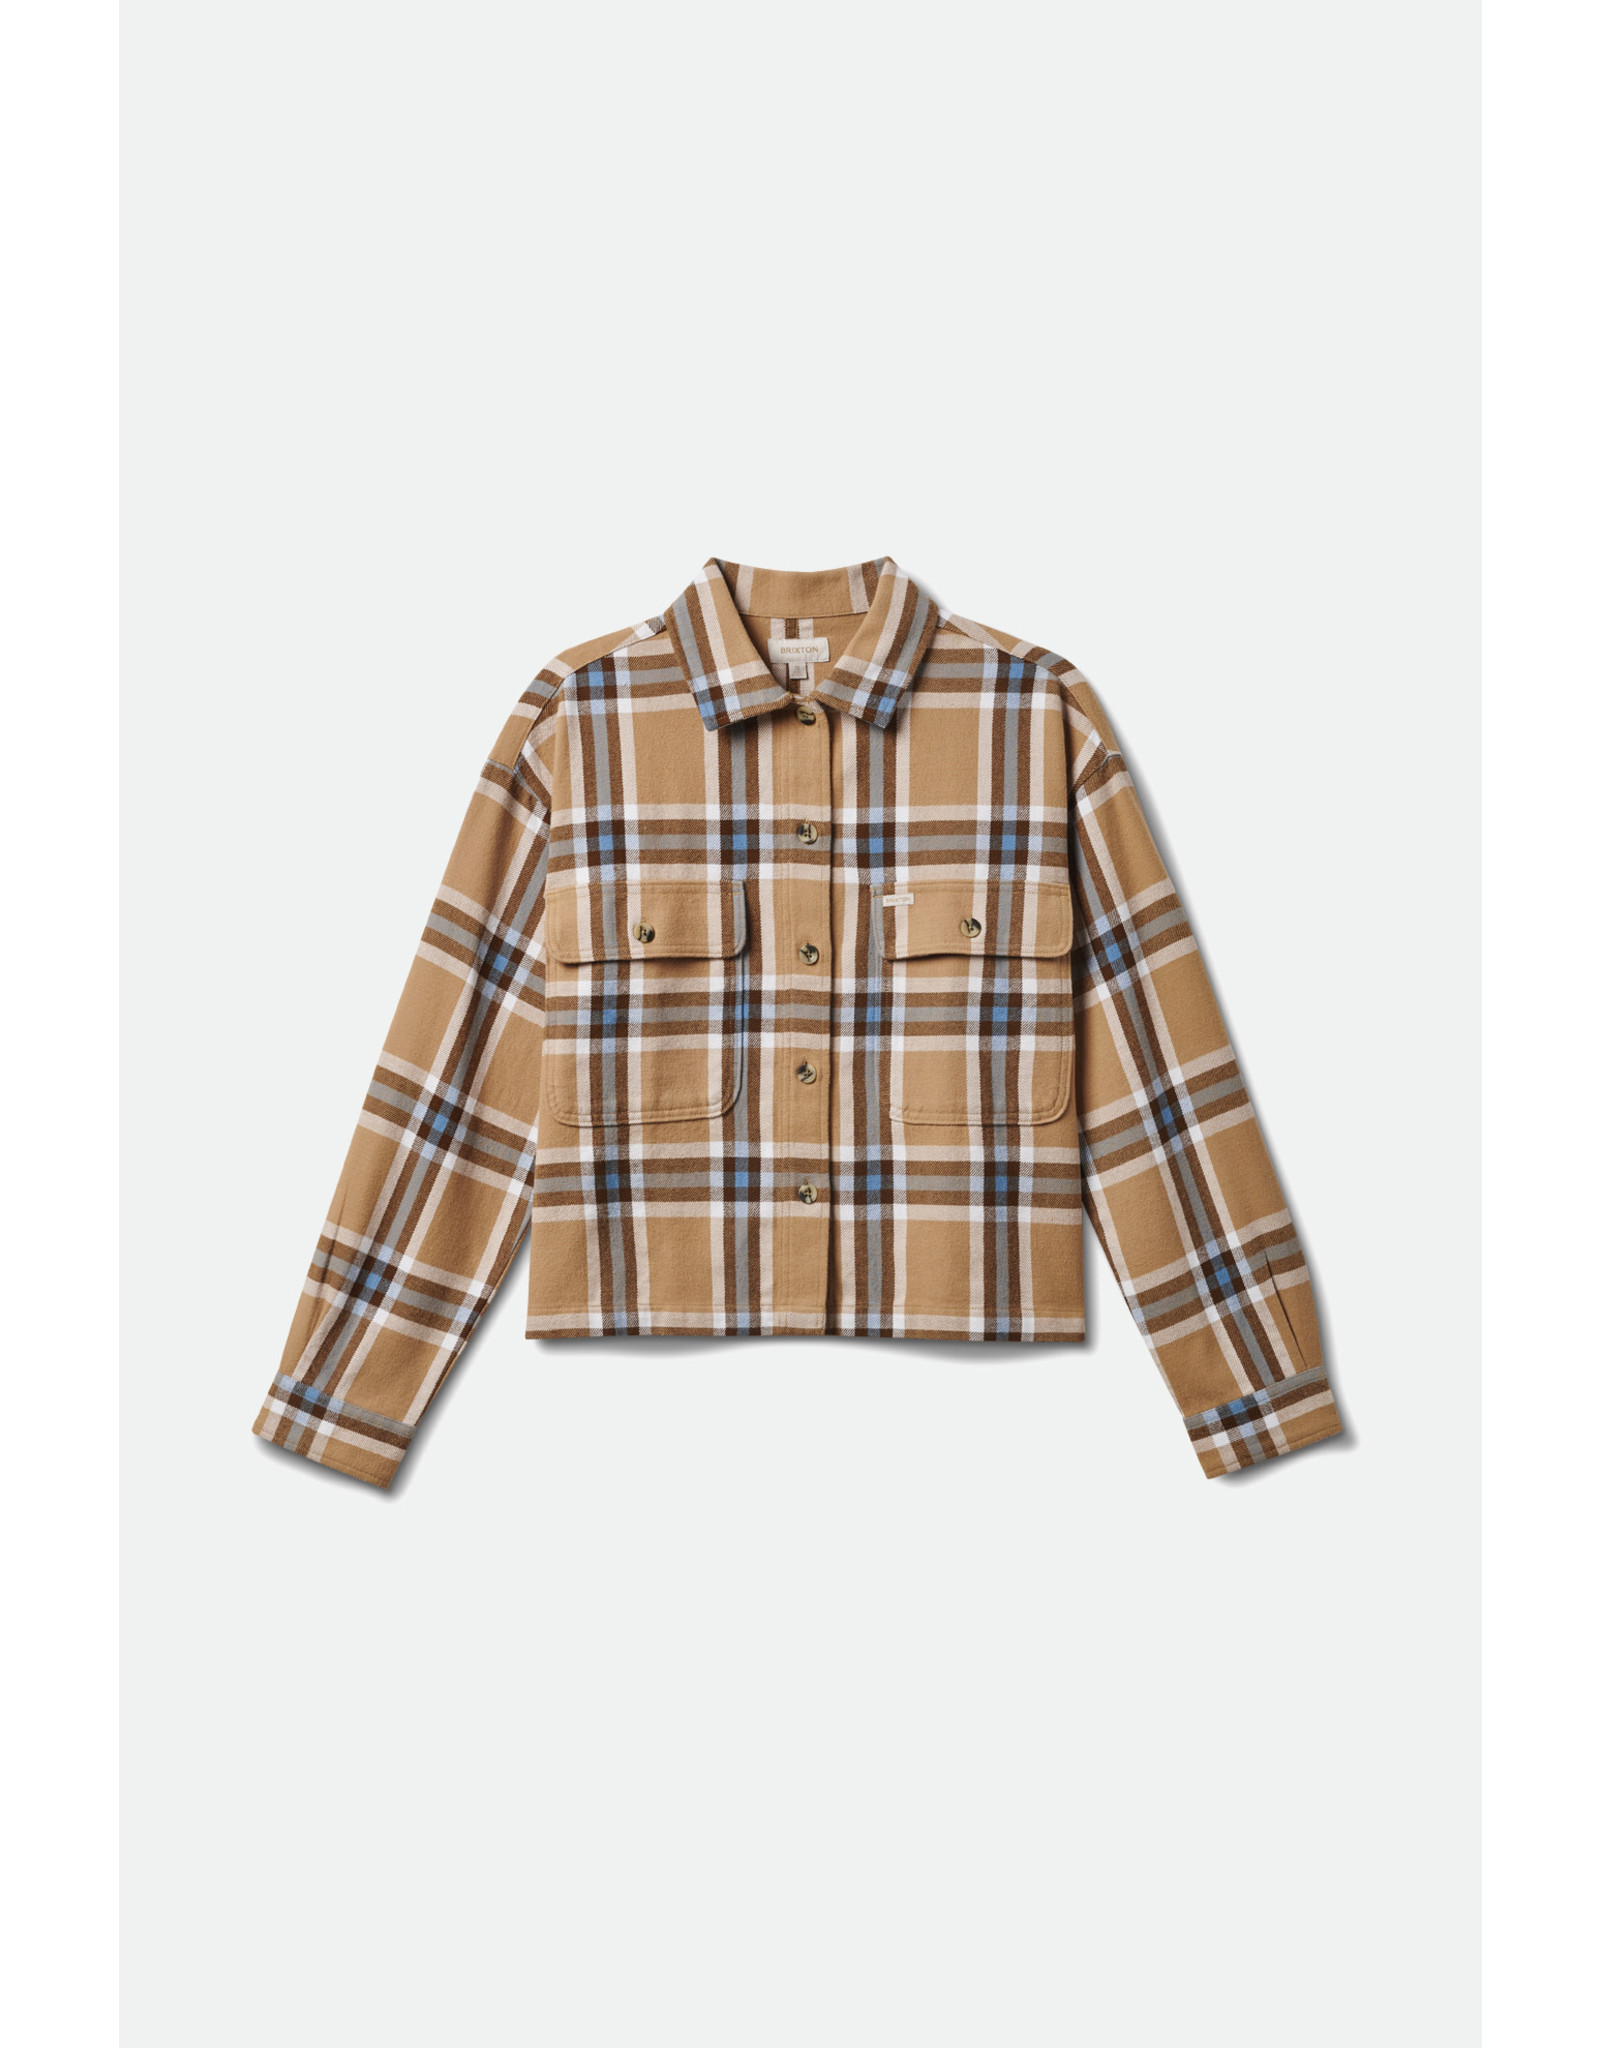 BGS Brixton - Flannel Shirt / Mojave